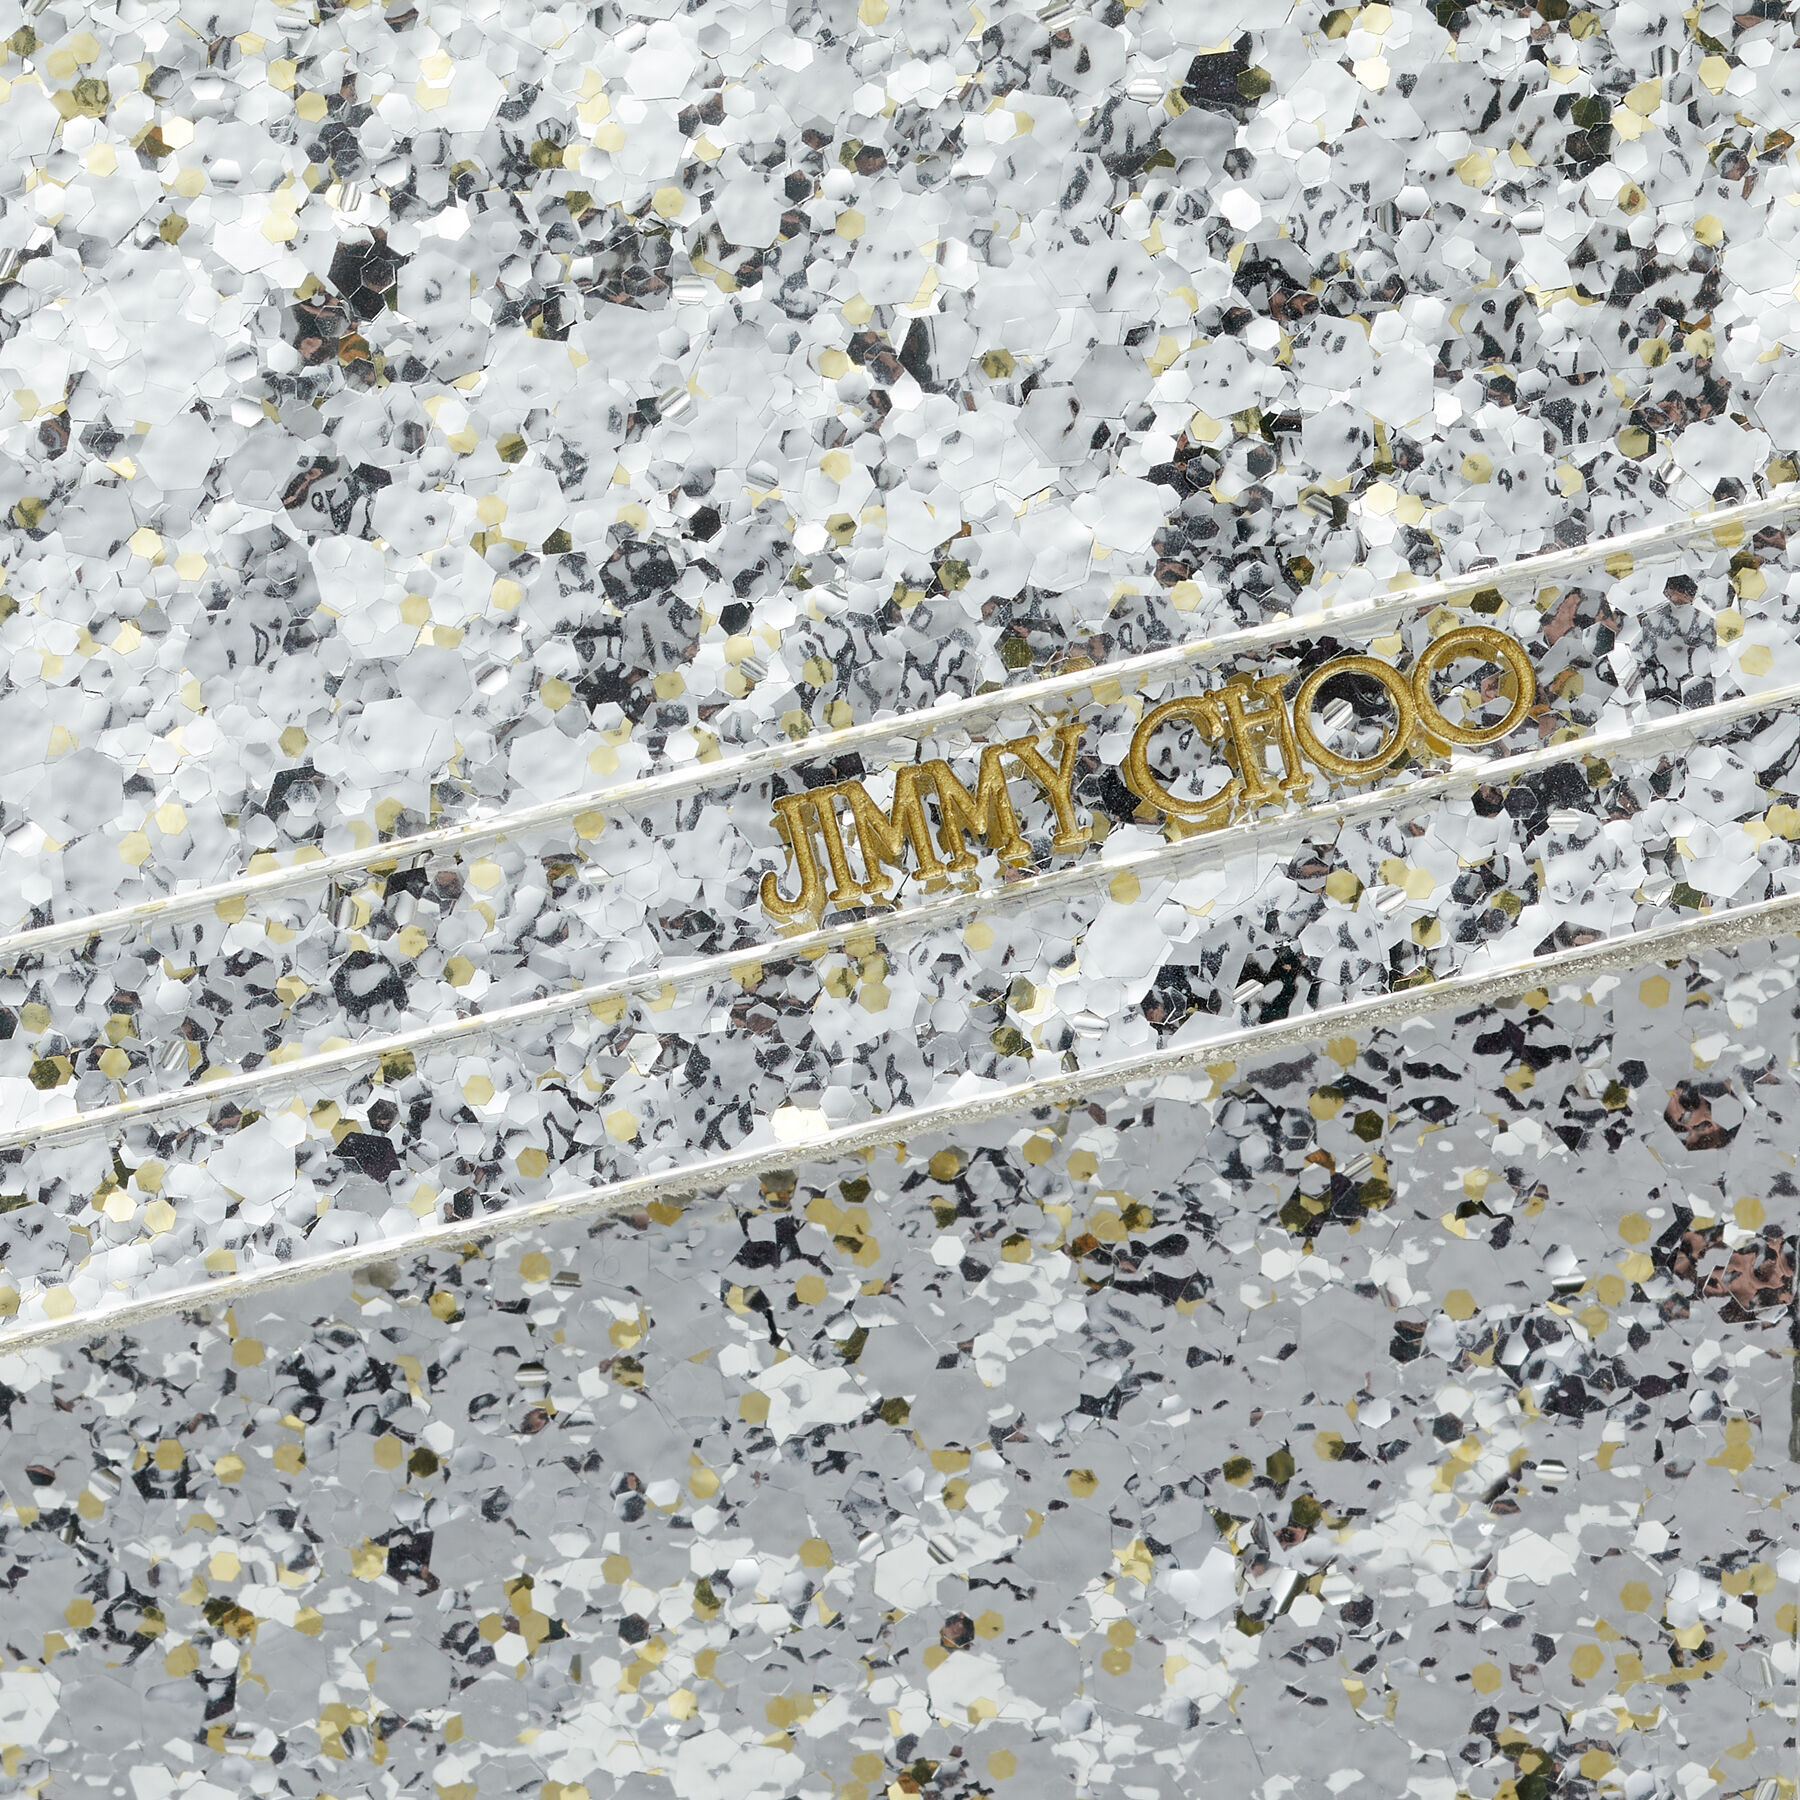 Champagne Coarse Glitter Acrylic Mini Clutch Bag | MICRO CANDY 